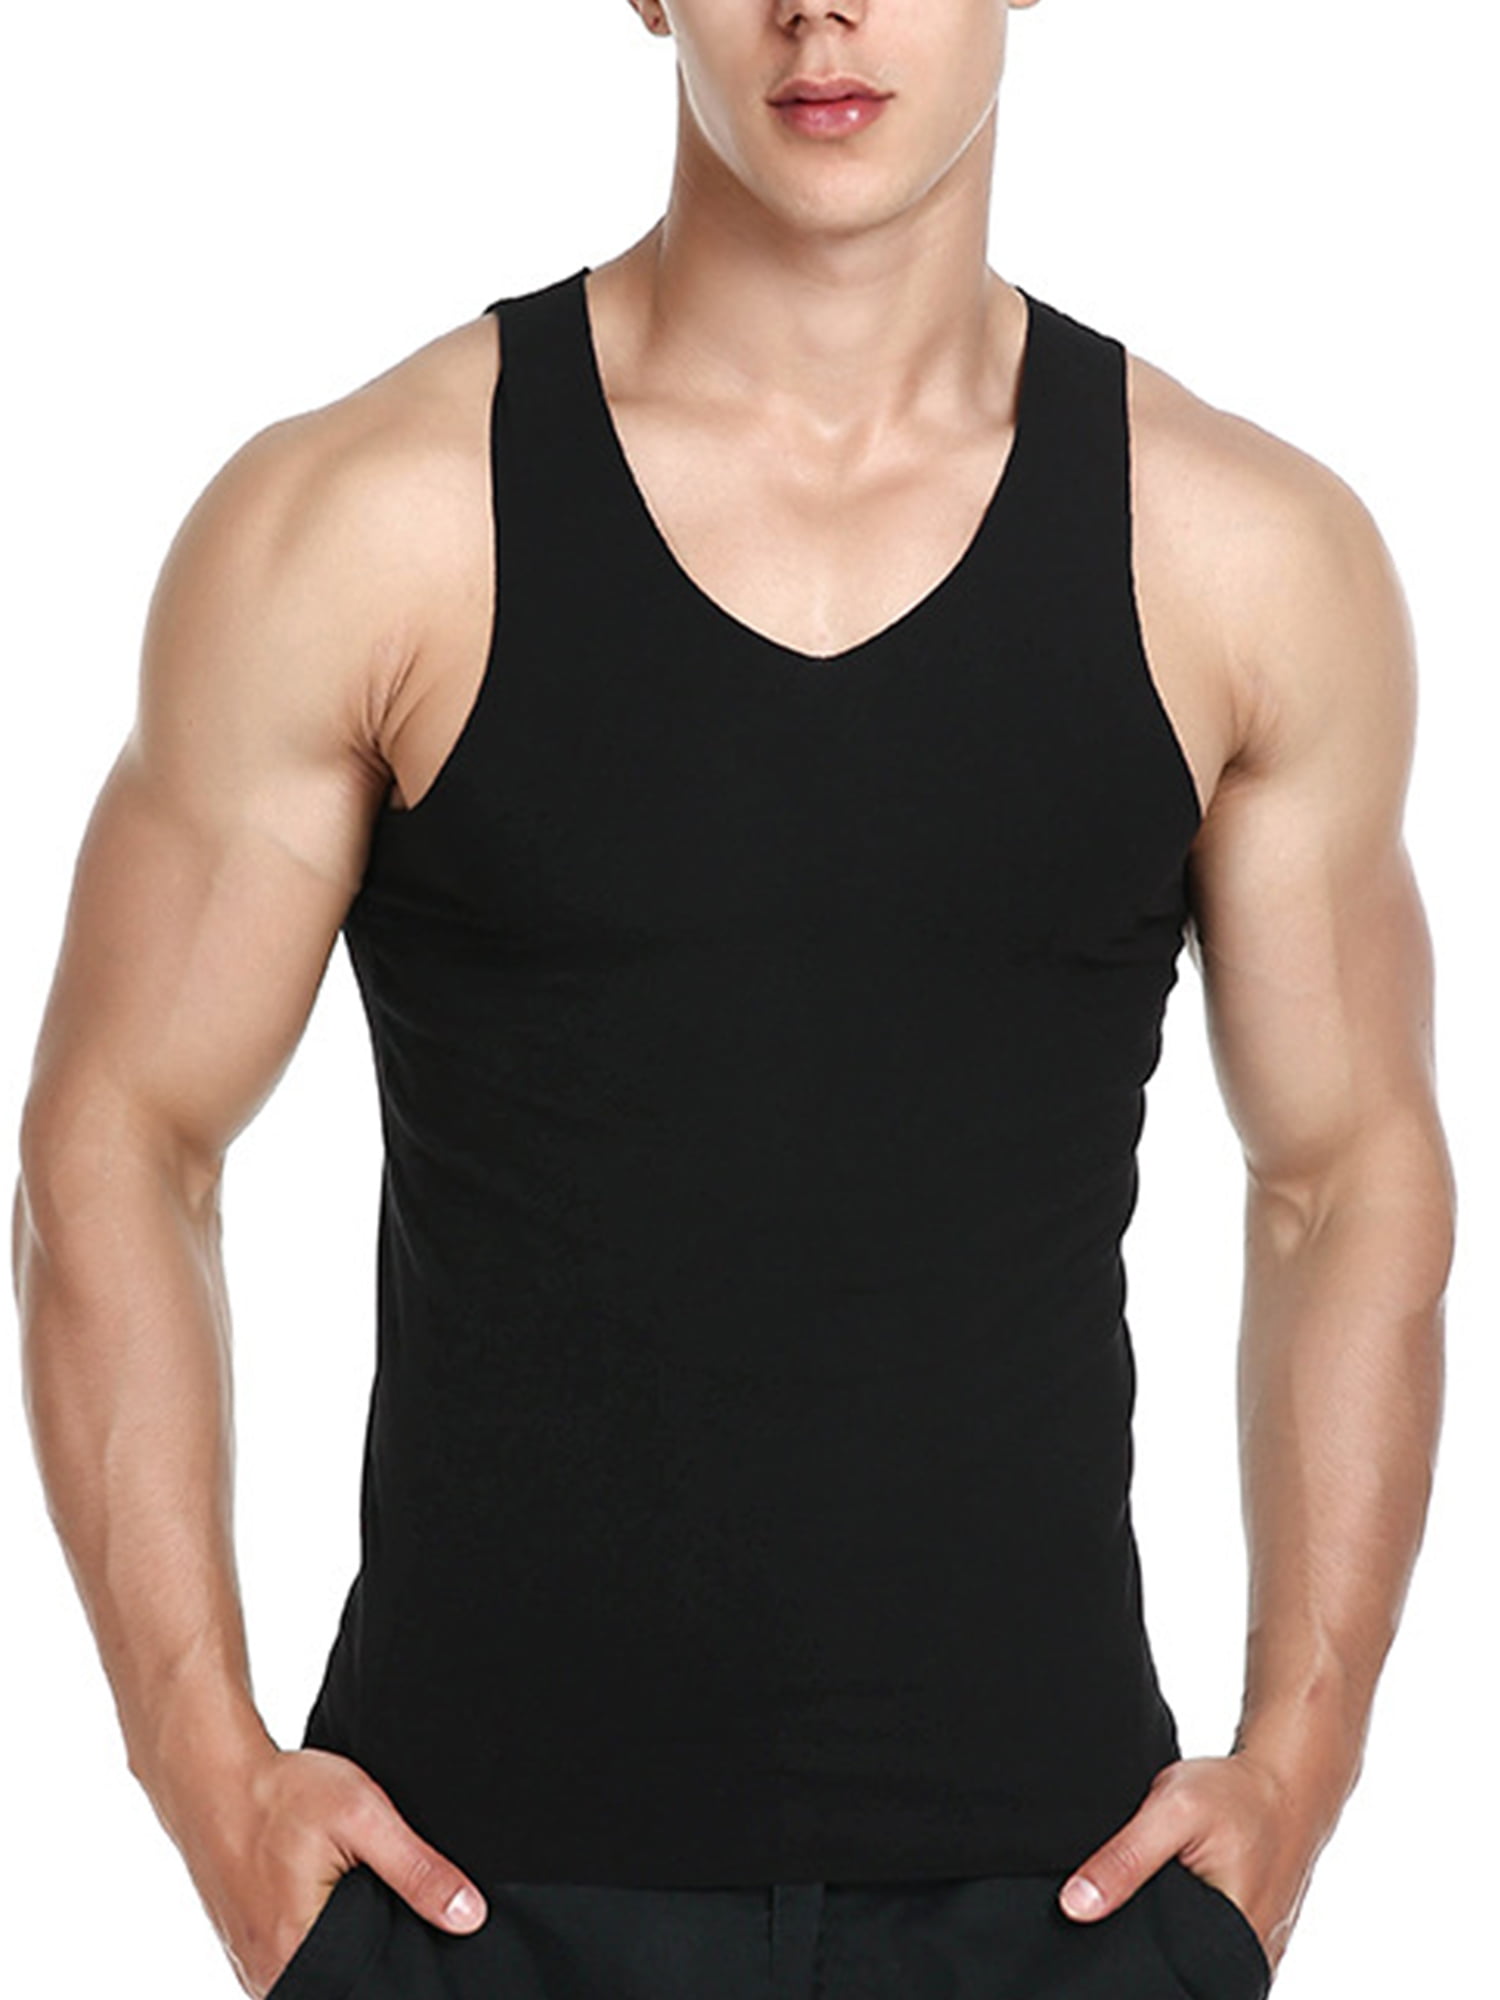 Plain 100% Cotton Vest Adults Mens Sleeveless Summer Training Gym Wear Top 